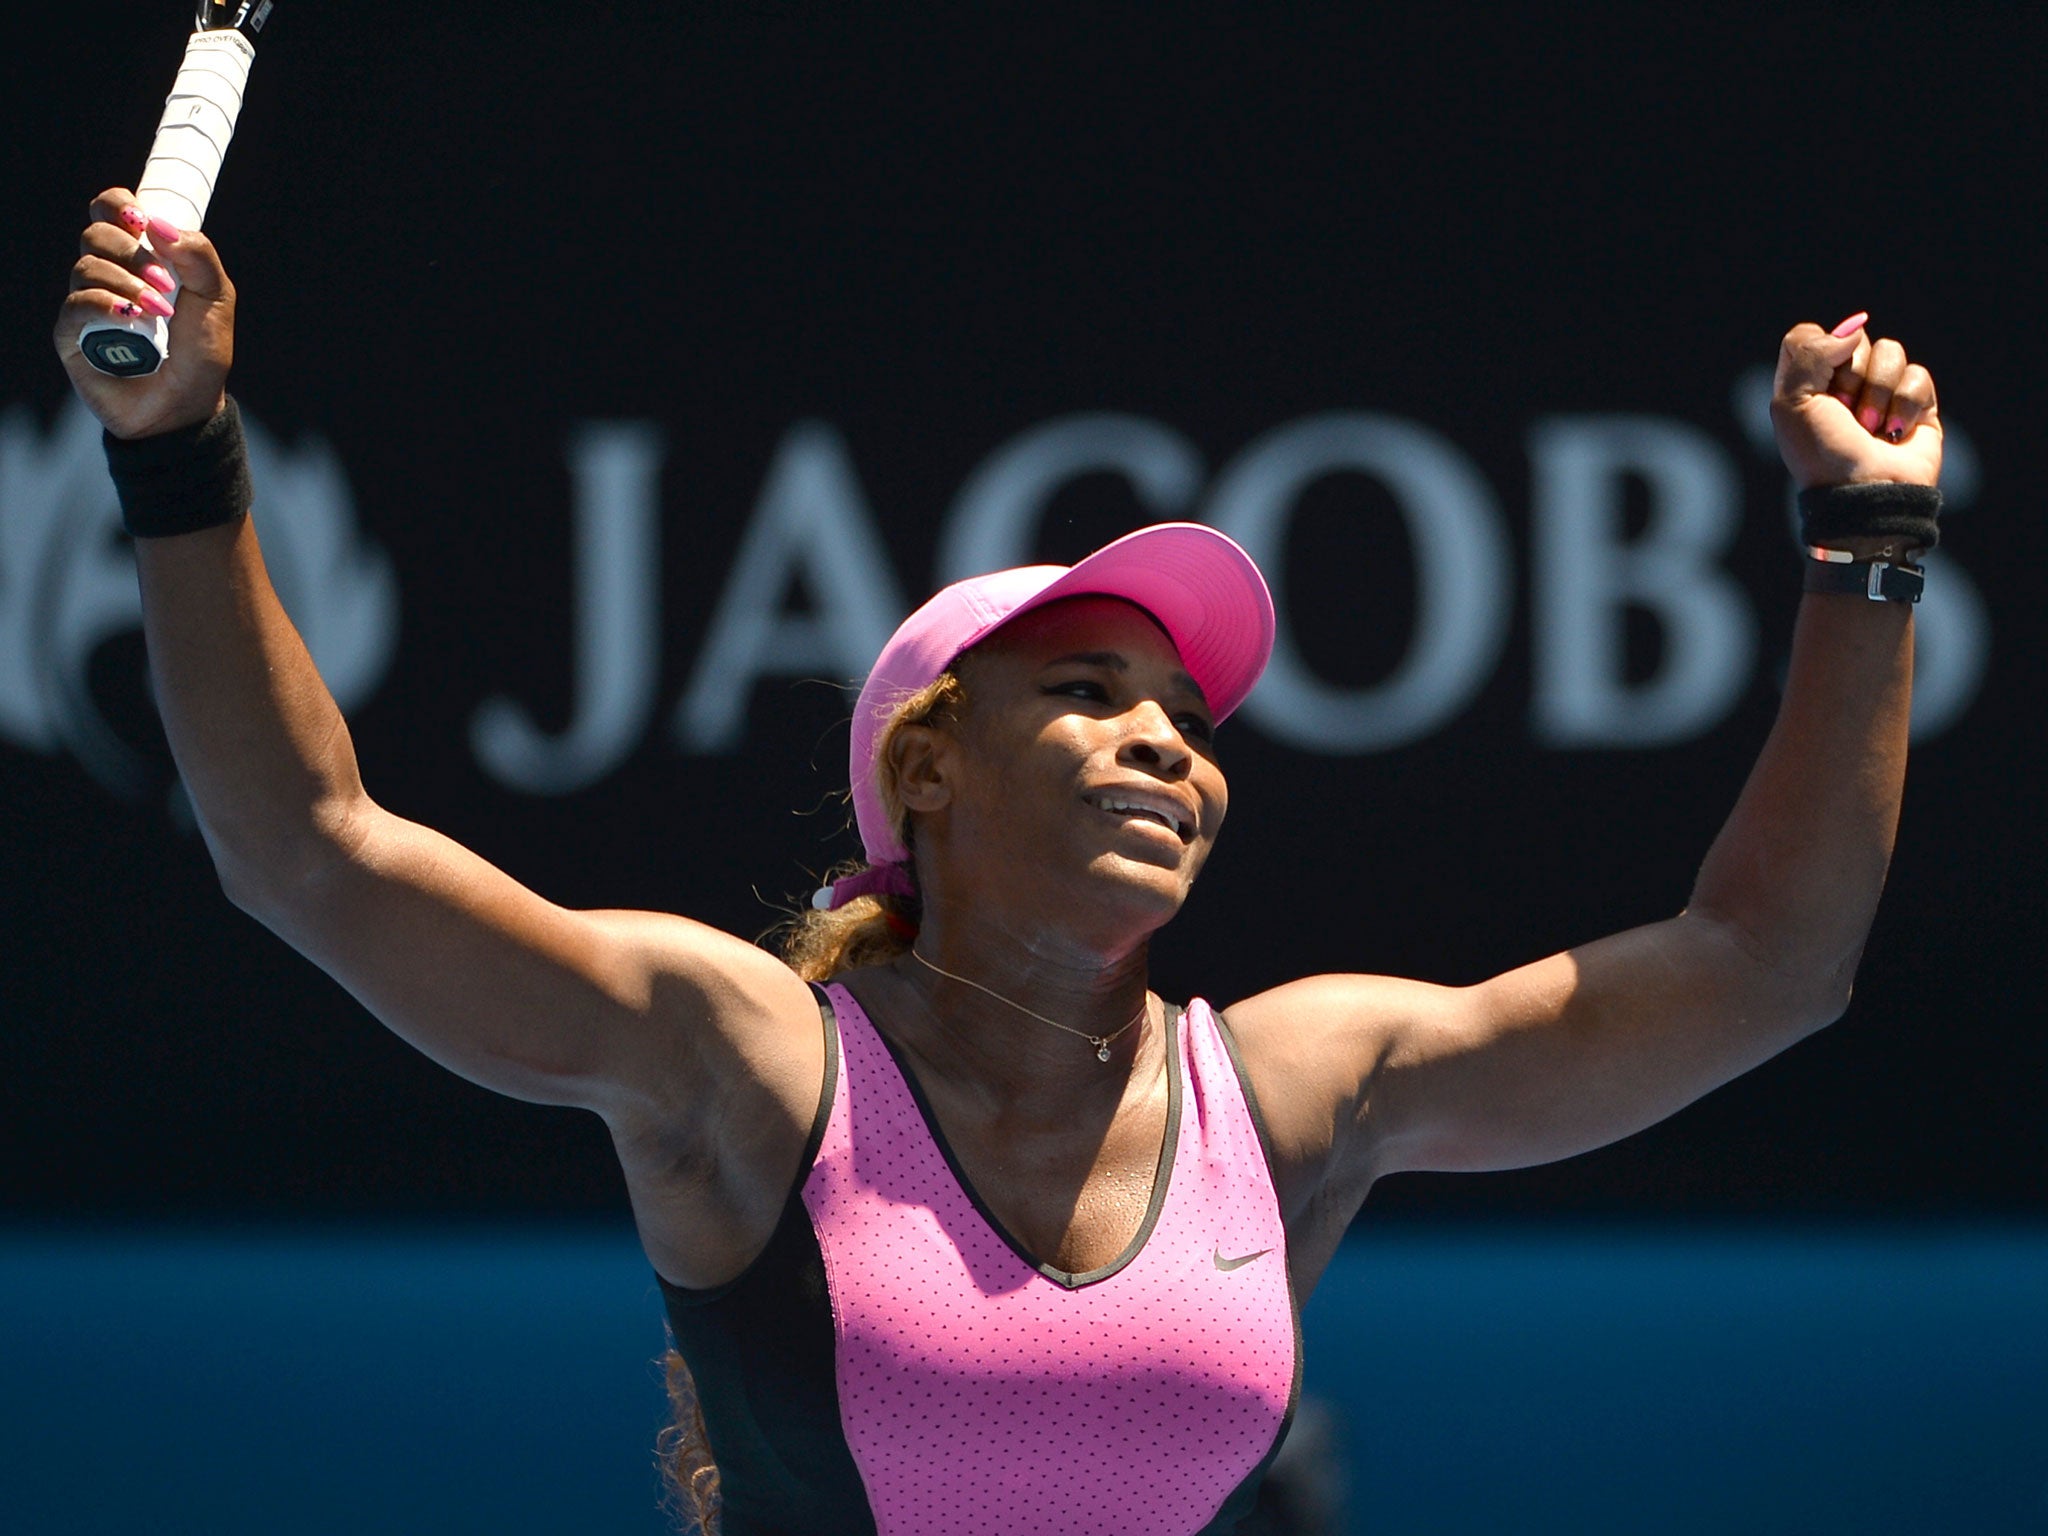 Serena Williams celebrates her third round victory over Daniela Hantuchova at the Australian Open